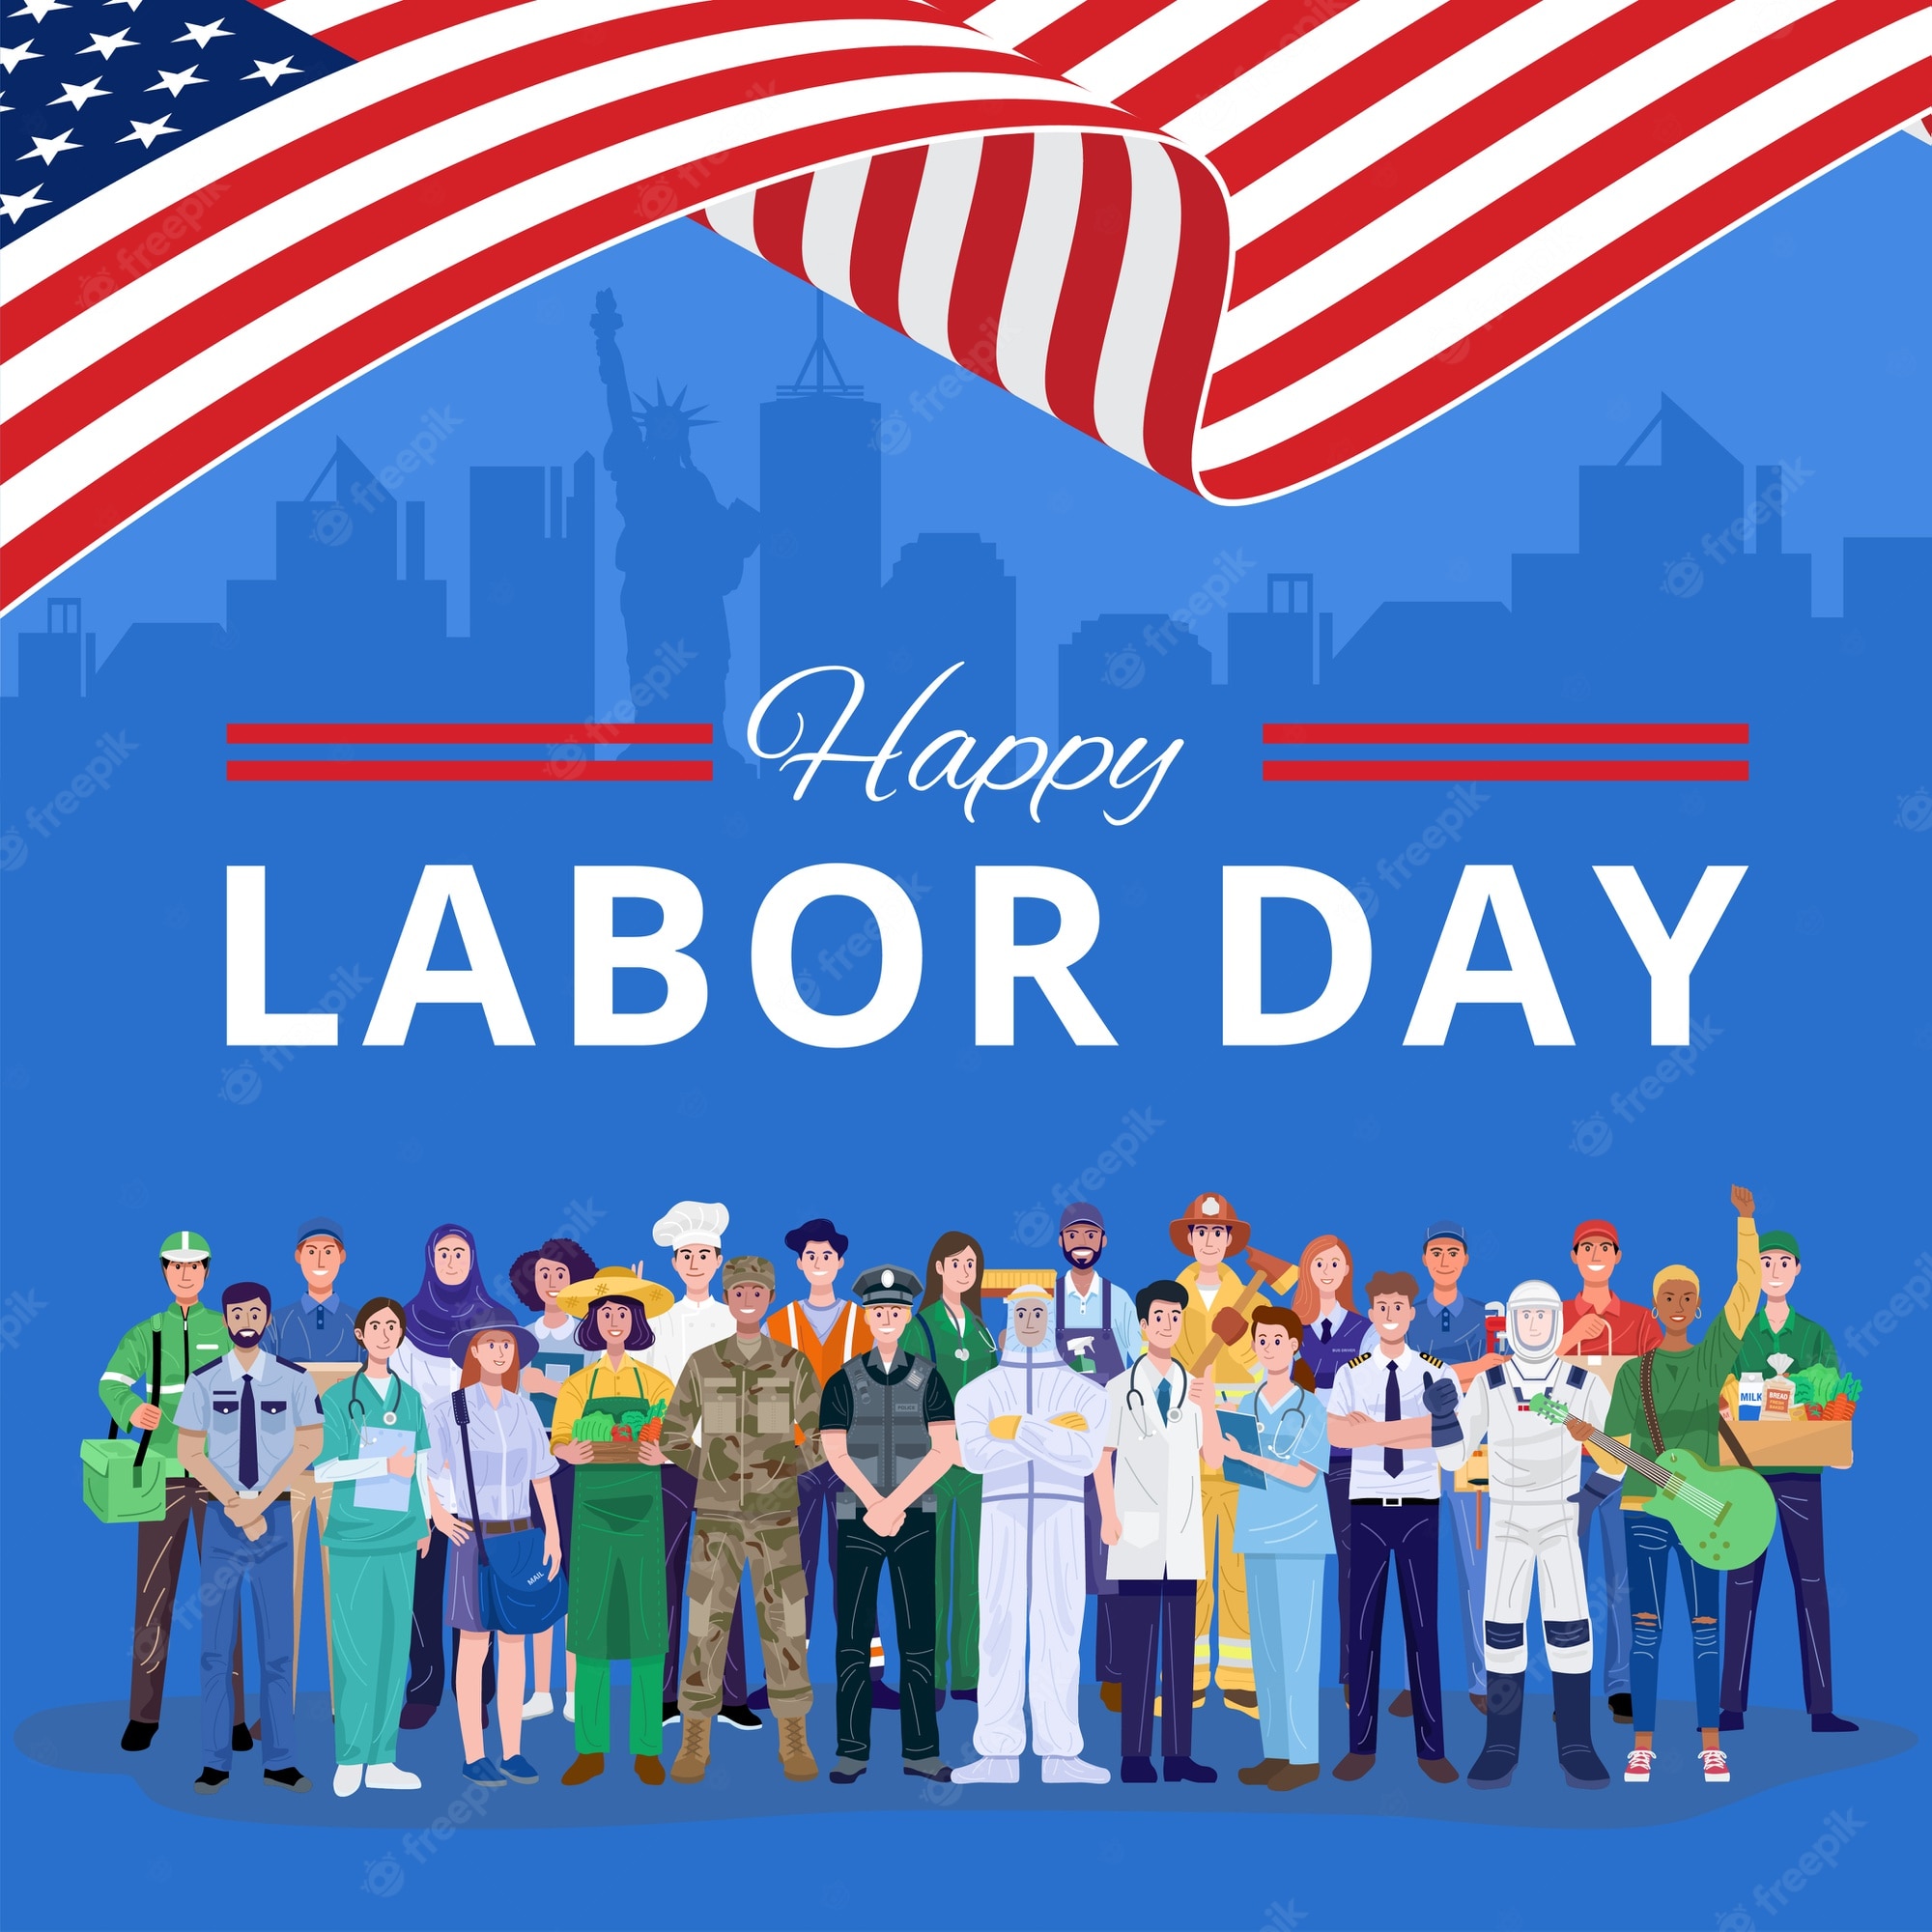 Happy Labor Day! Lake Lure North Carolina